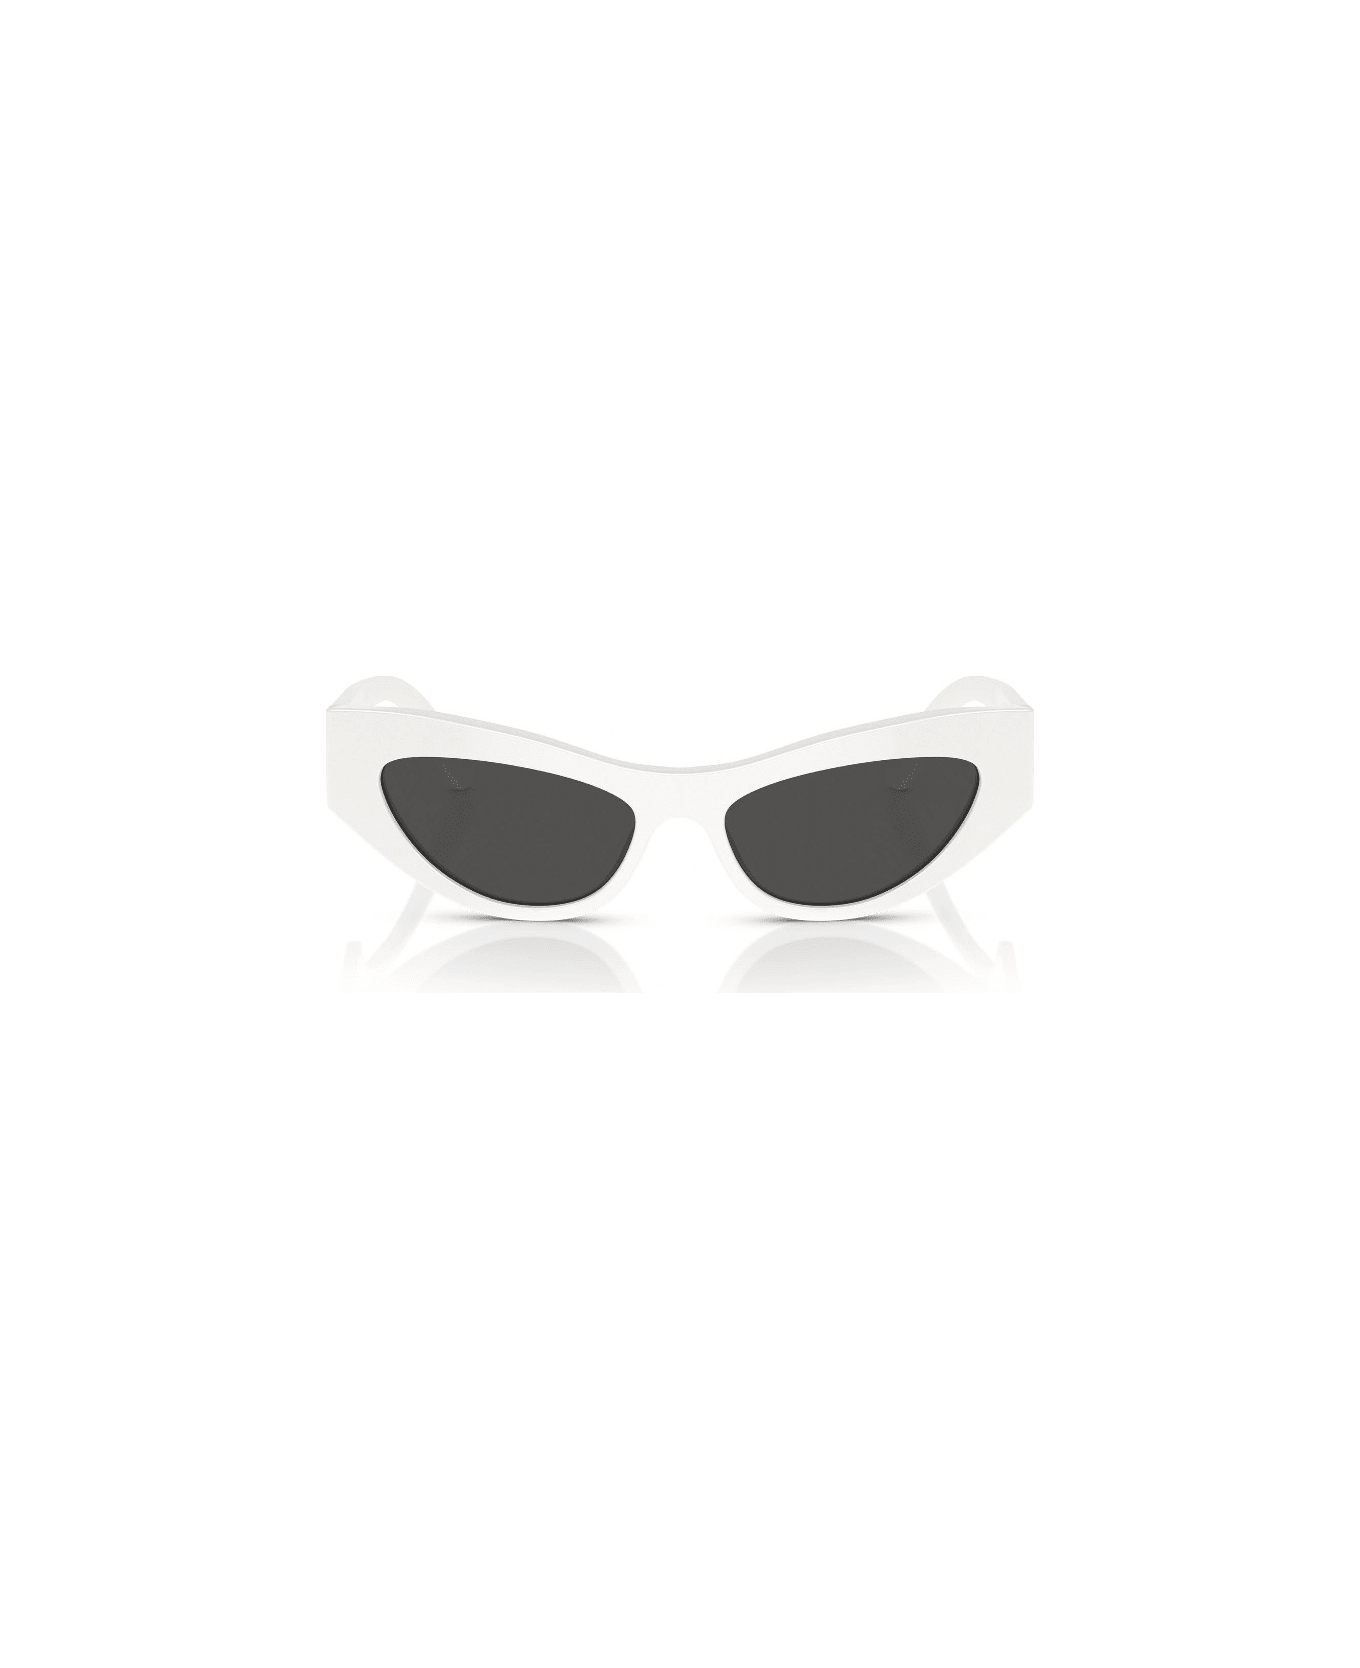 Dolce & Gabbana Eyewear DG4450s 3312/87 Sunglasses - Bianco